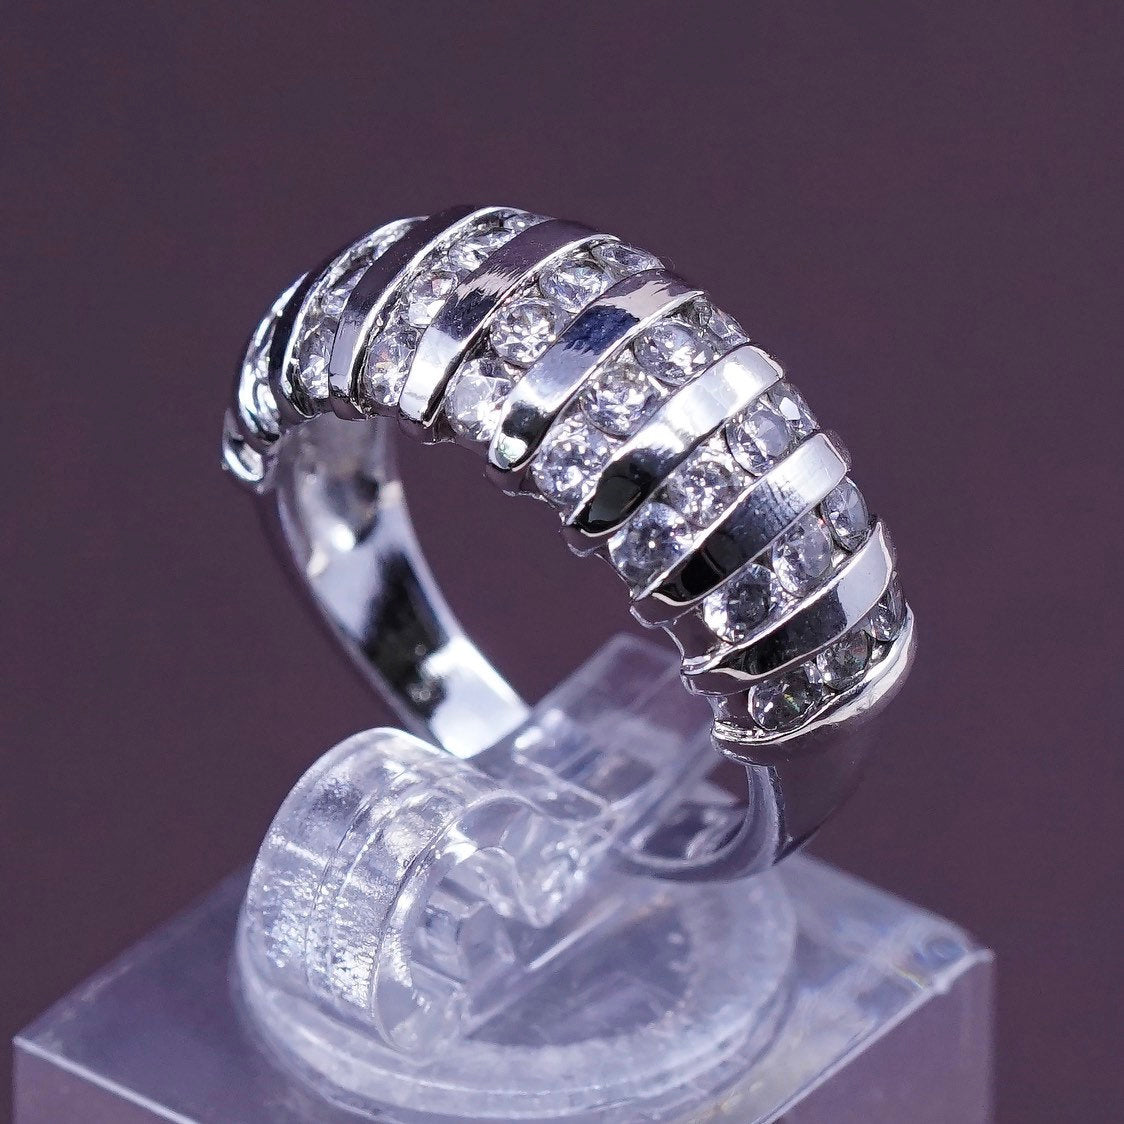 sz 5.75, vtg Sterling silver handmade ring, modern 925 band w/ cz